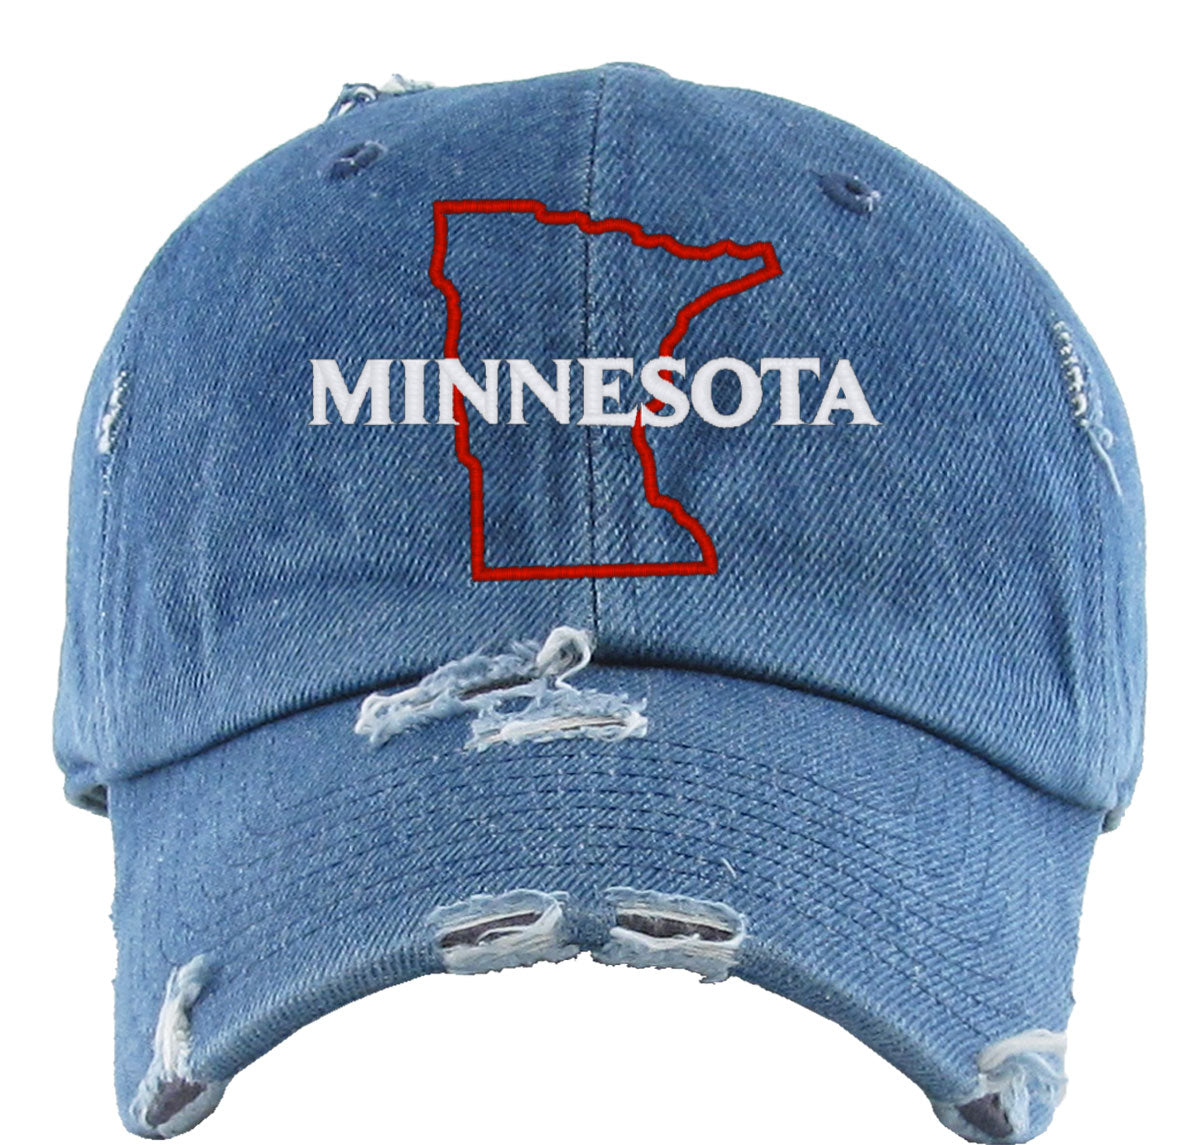 Minnesota Vintage Baseball Cap